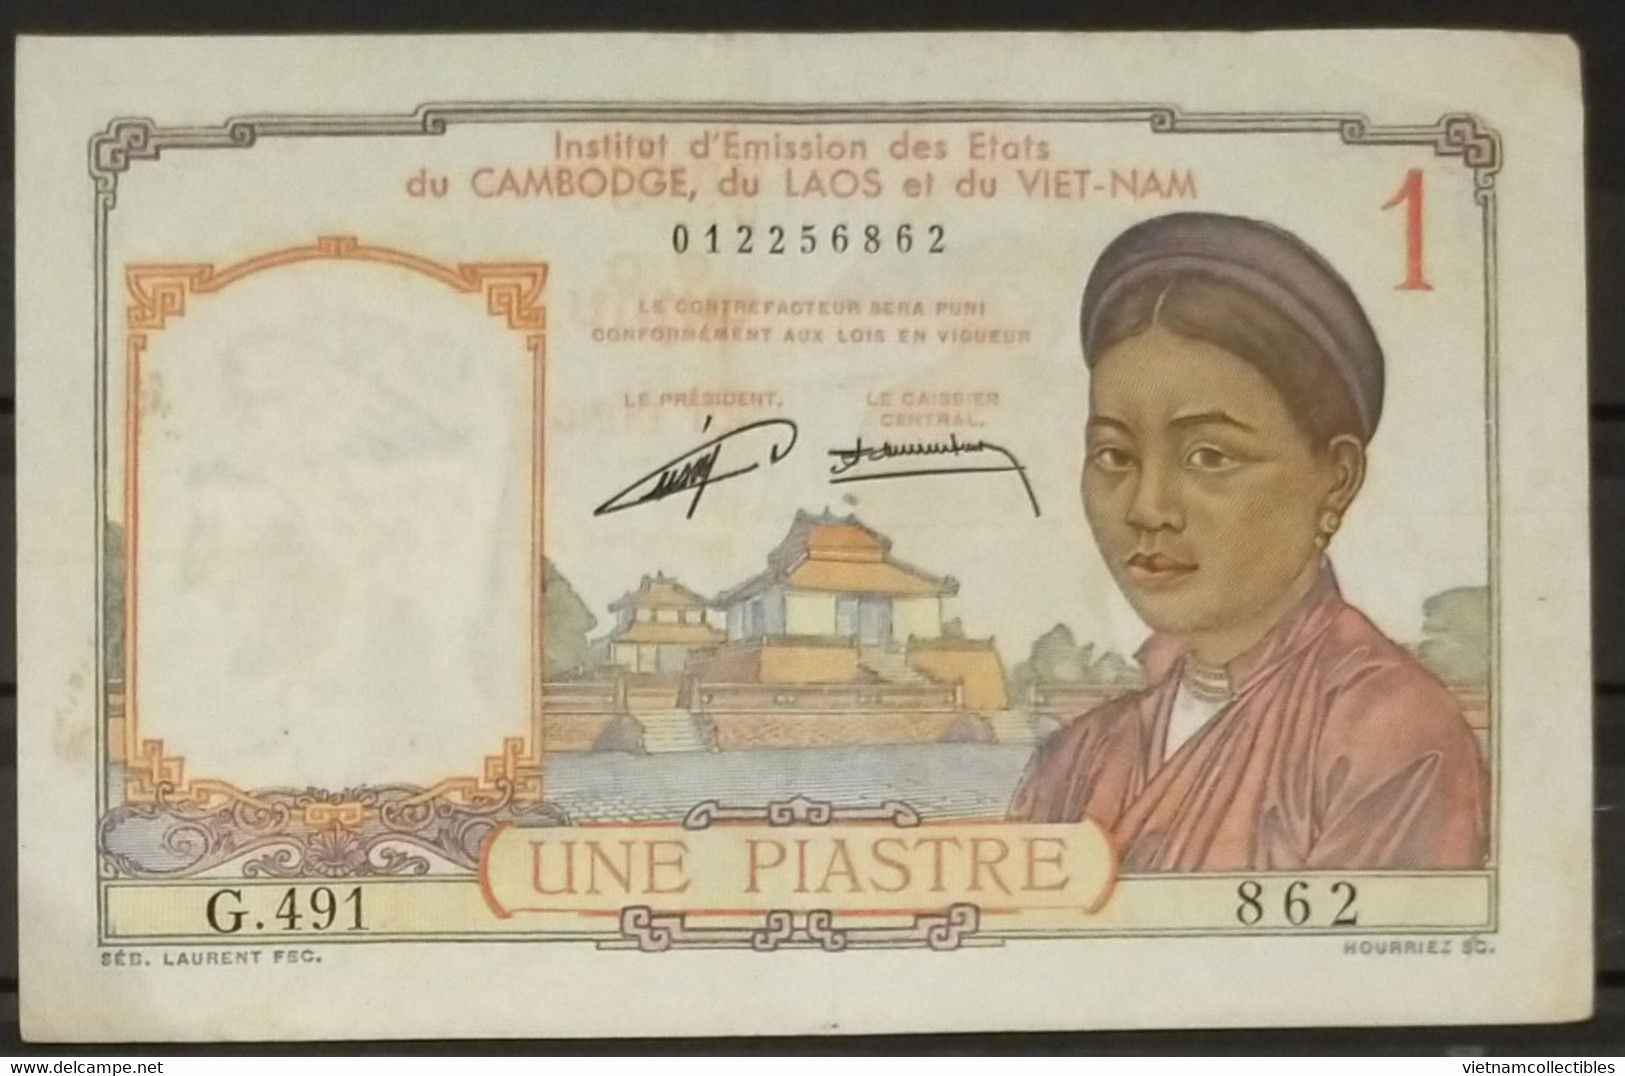 French Indochine Indochina Vietnam Viet Nam Laos Cambodia 1 Piastre VF Banknote Note 1953 - Pick # 92 / 2 Photos - Indochine